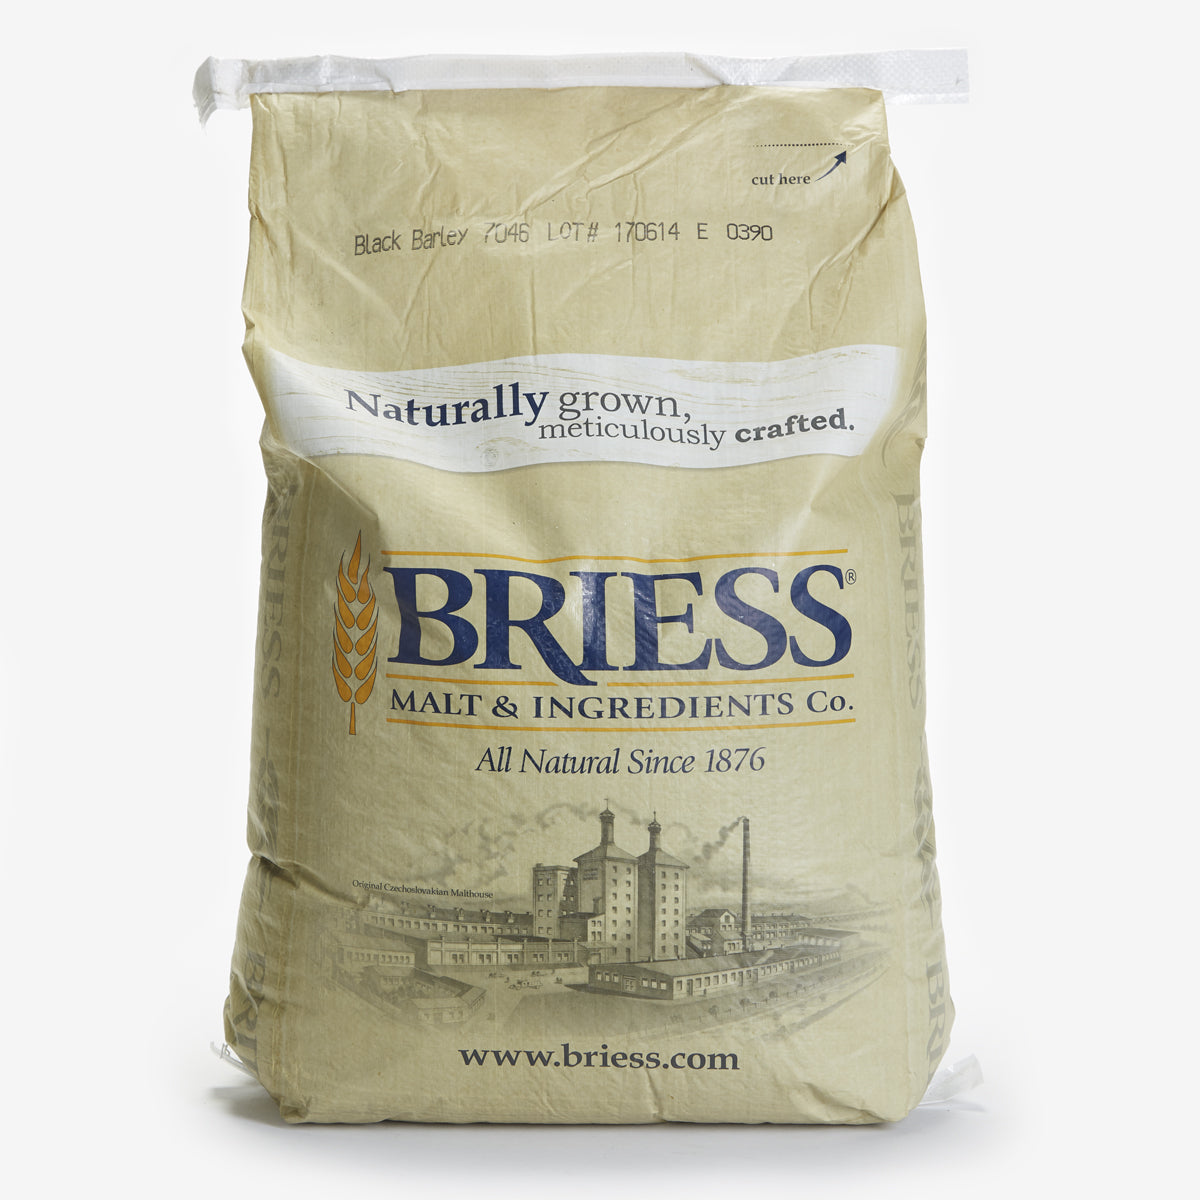 Briess Black Barley